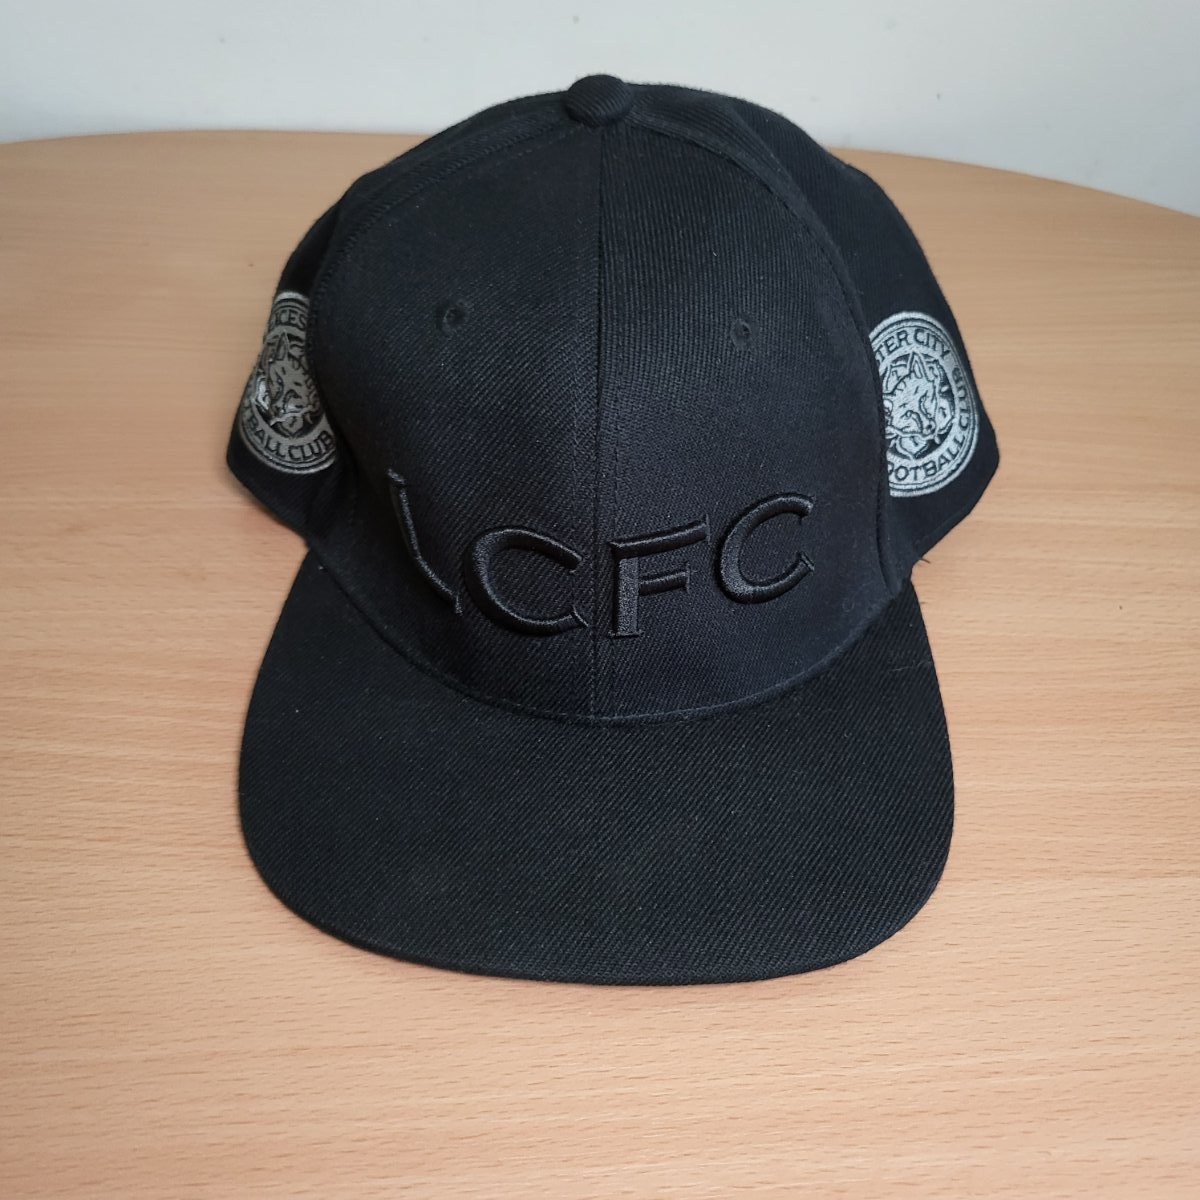 Rare LCFC Cap? - Leicester City Forum - FoxesTalk